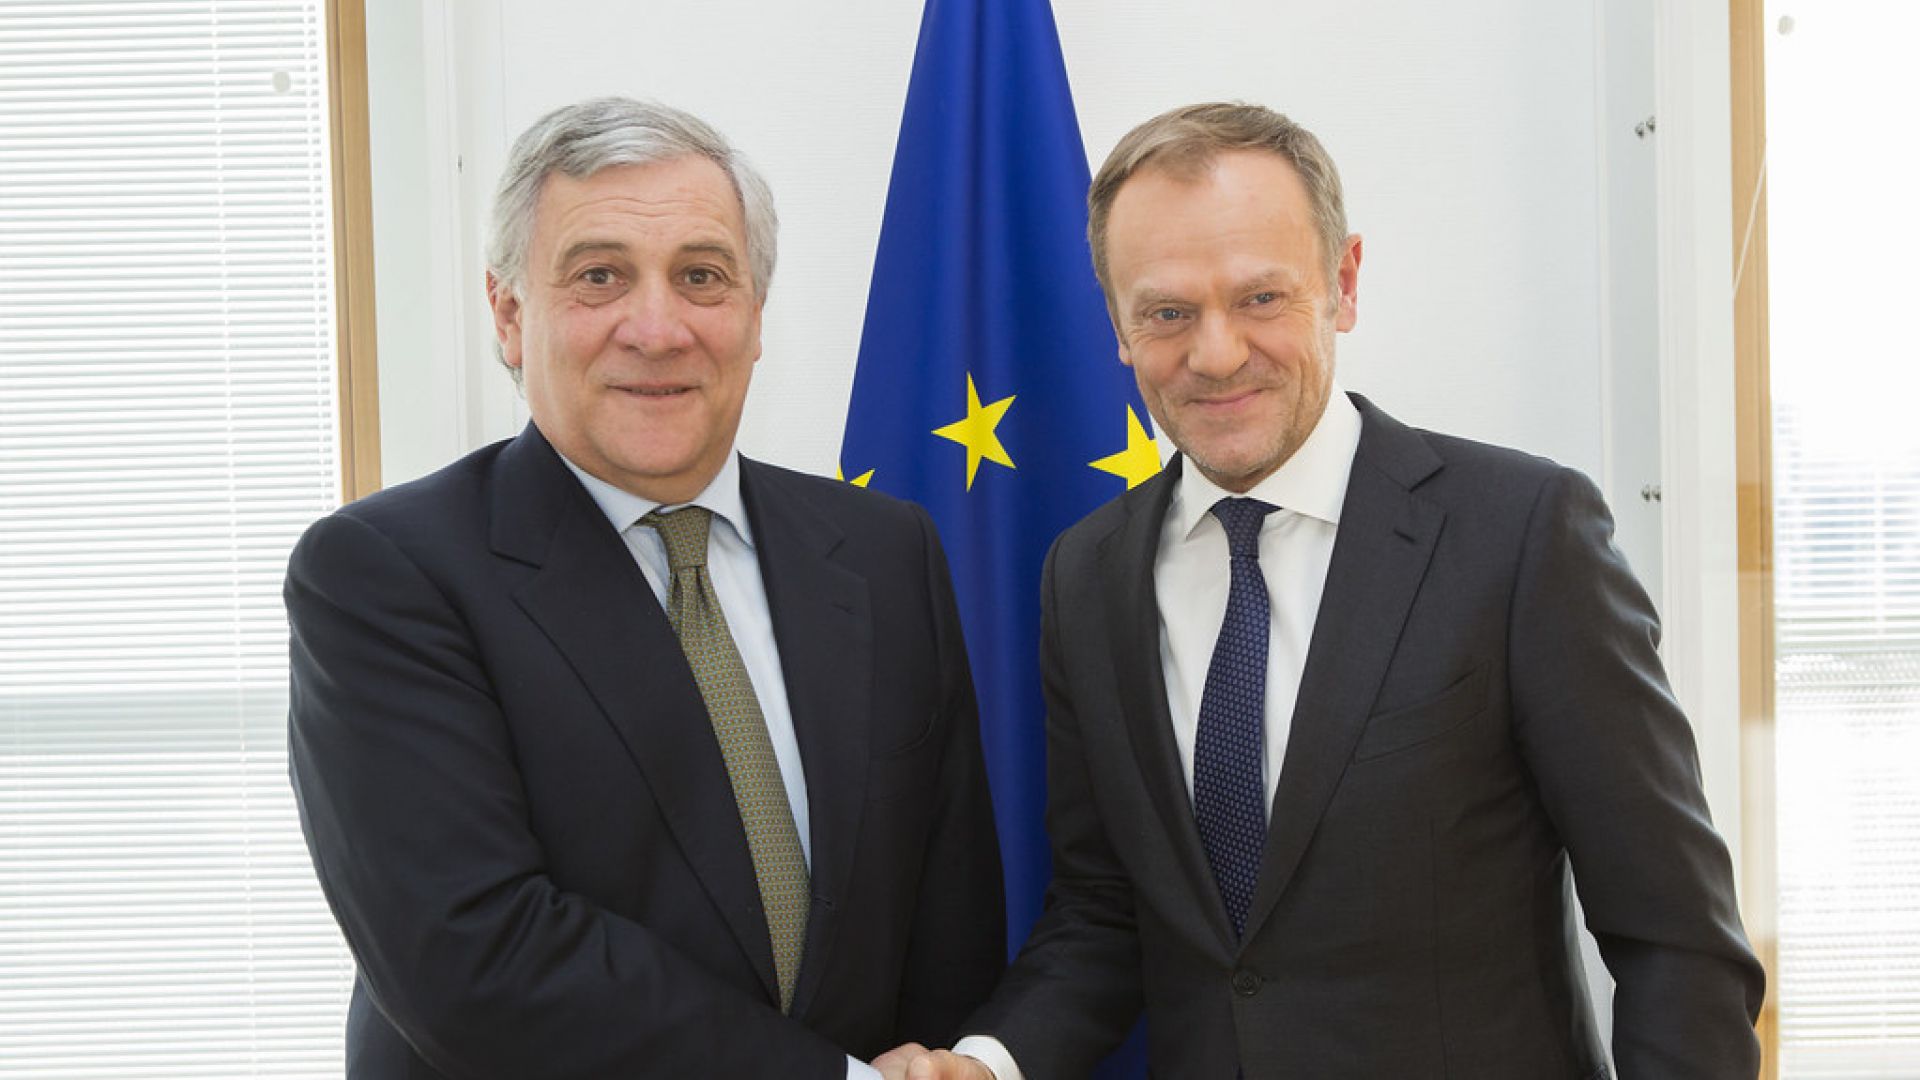 President of the European Council Donald Tusk and the President of the European Parliament Antonio Tajani